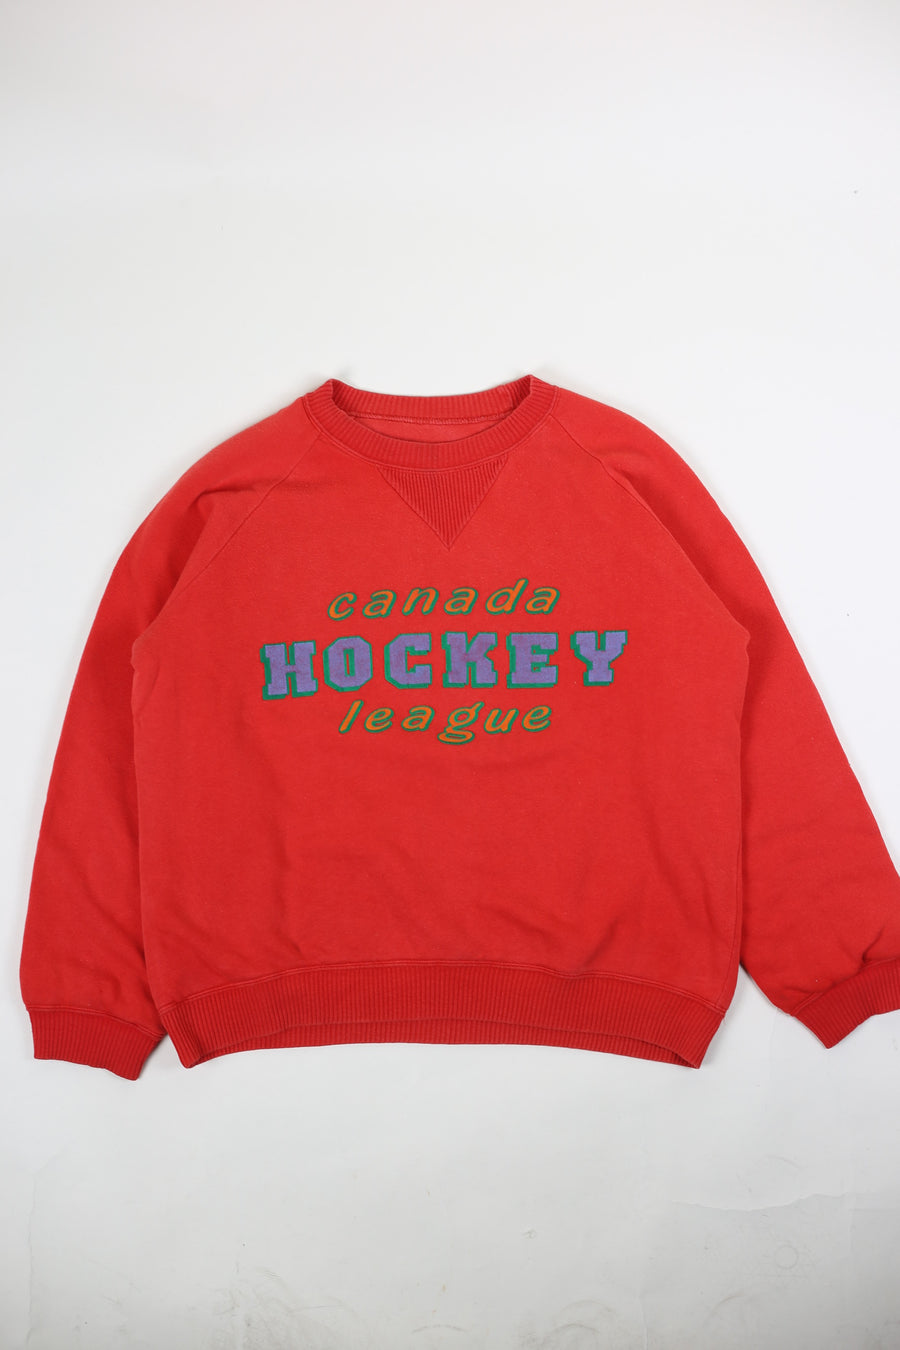 Double-sided American Hockey sweatshirt - M -